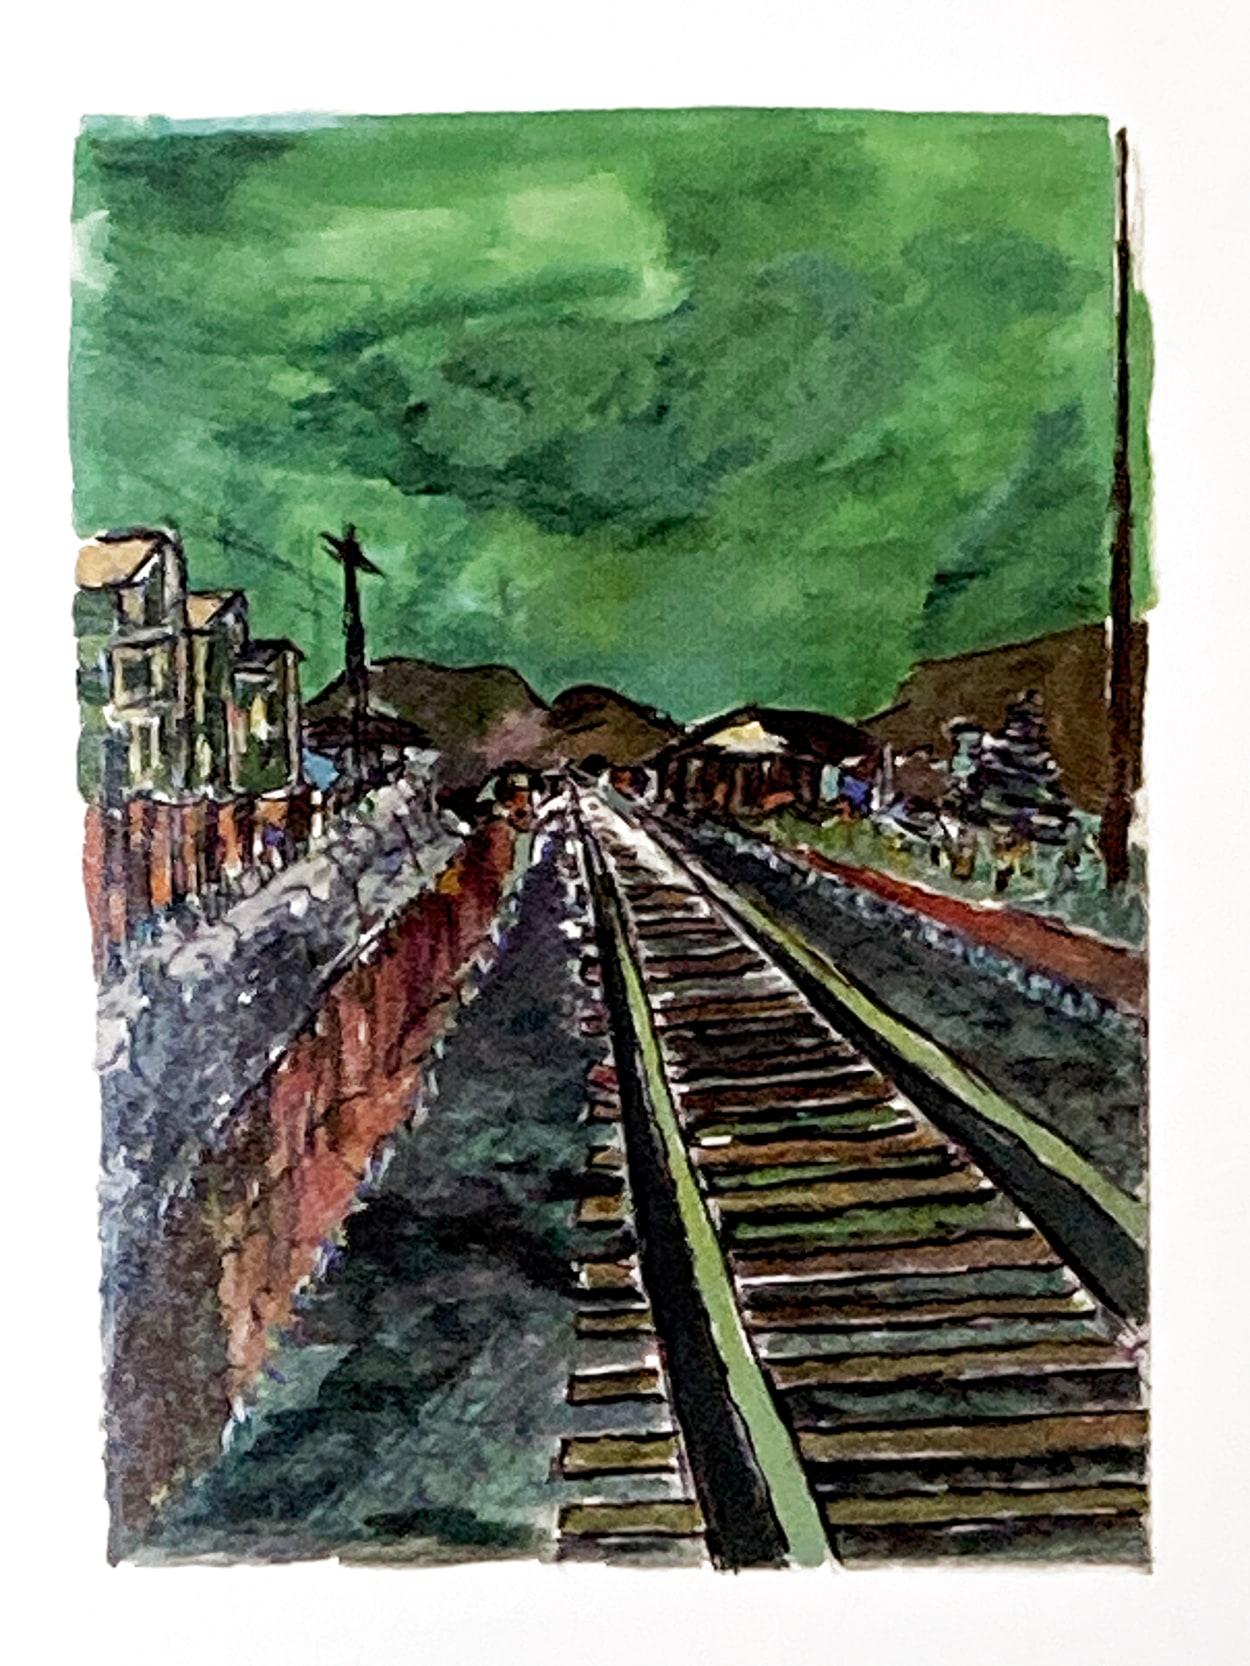 Bob Dylan - Train Tracks (green), 2008